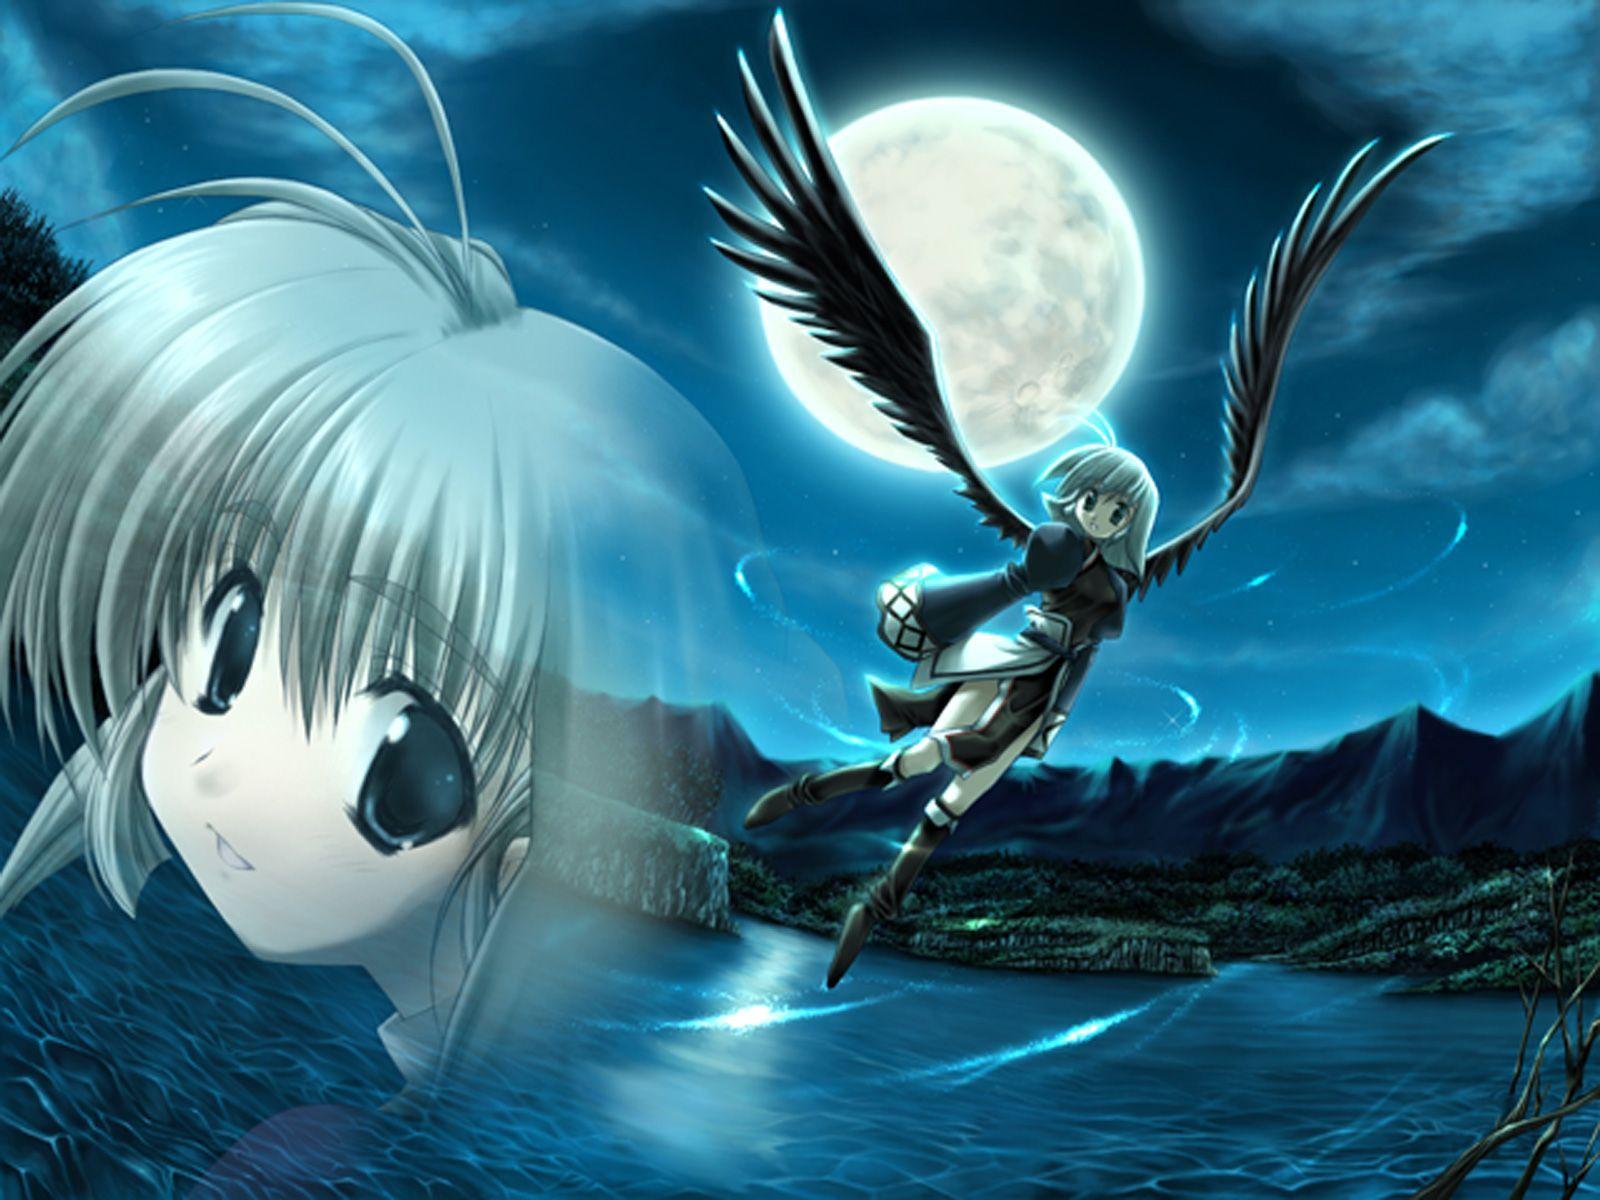 Anime wallpaper on the cartoon Black Angel 2 Black Angel 2